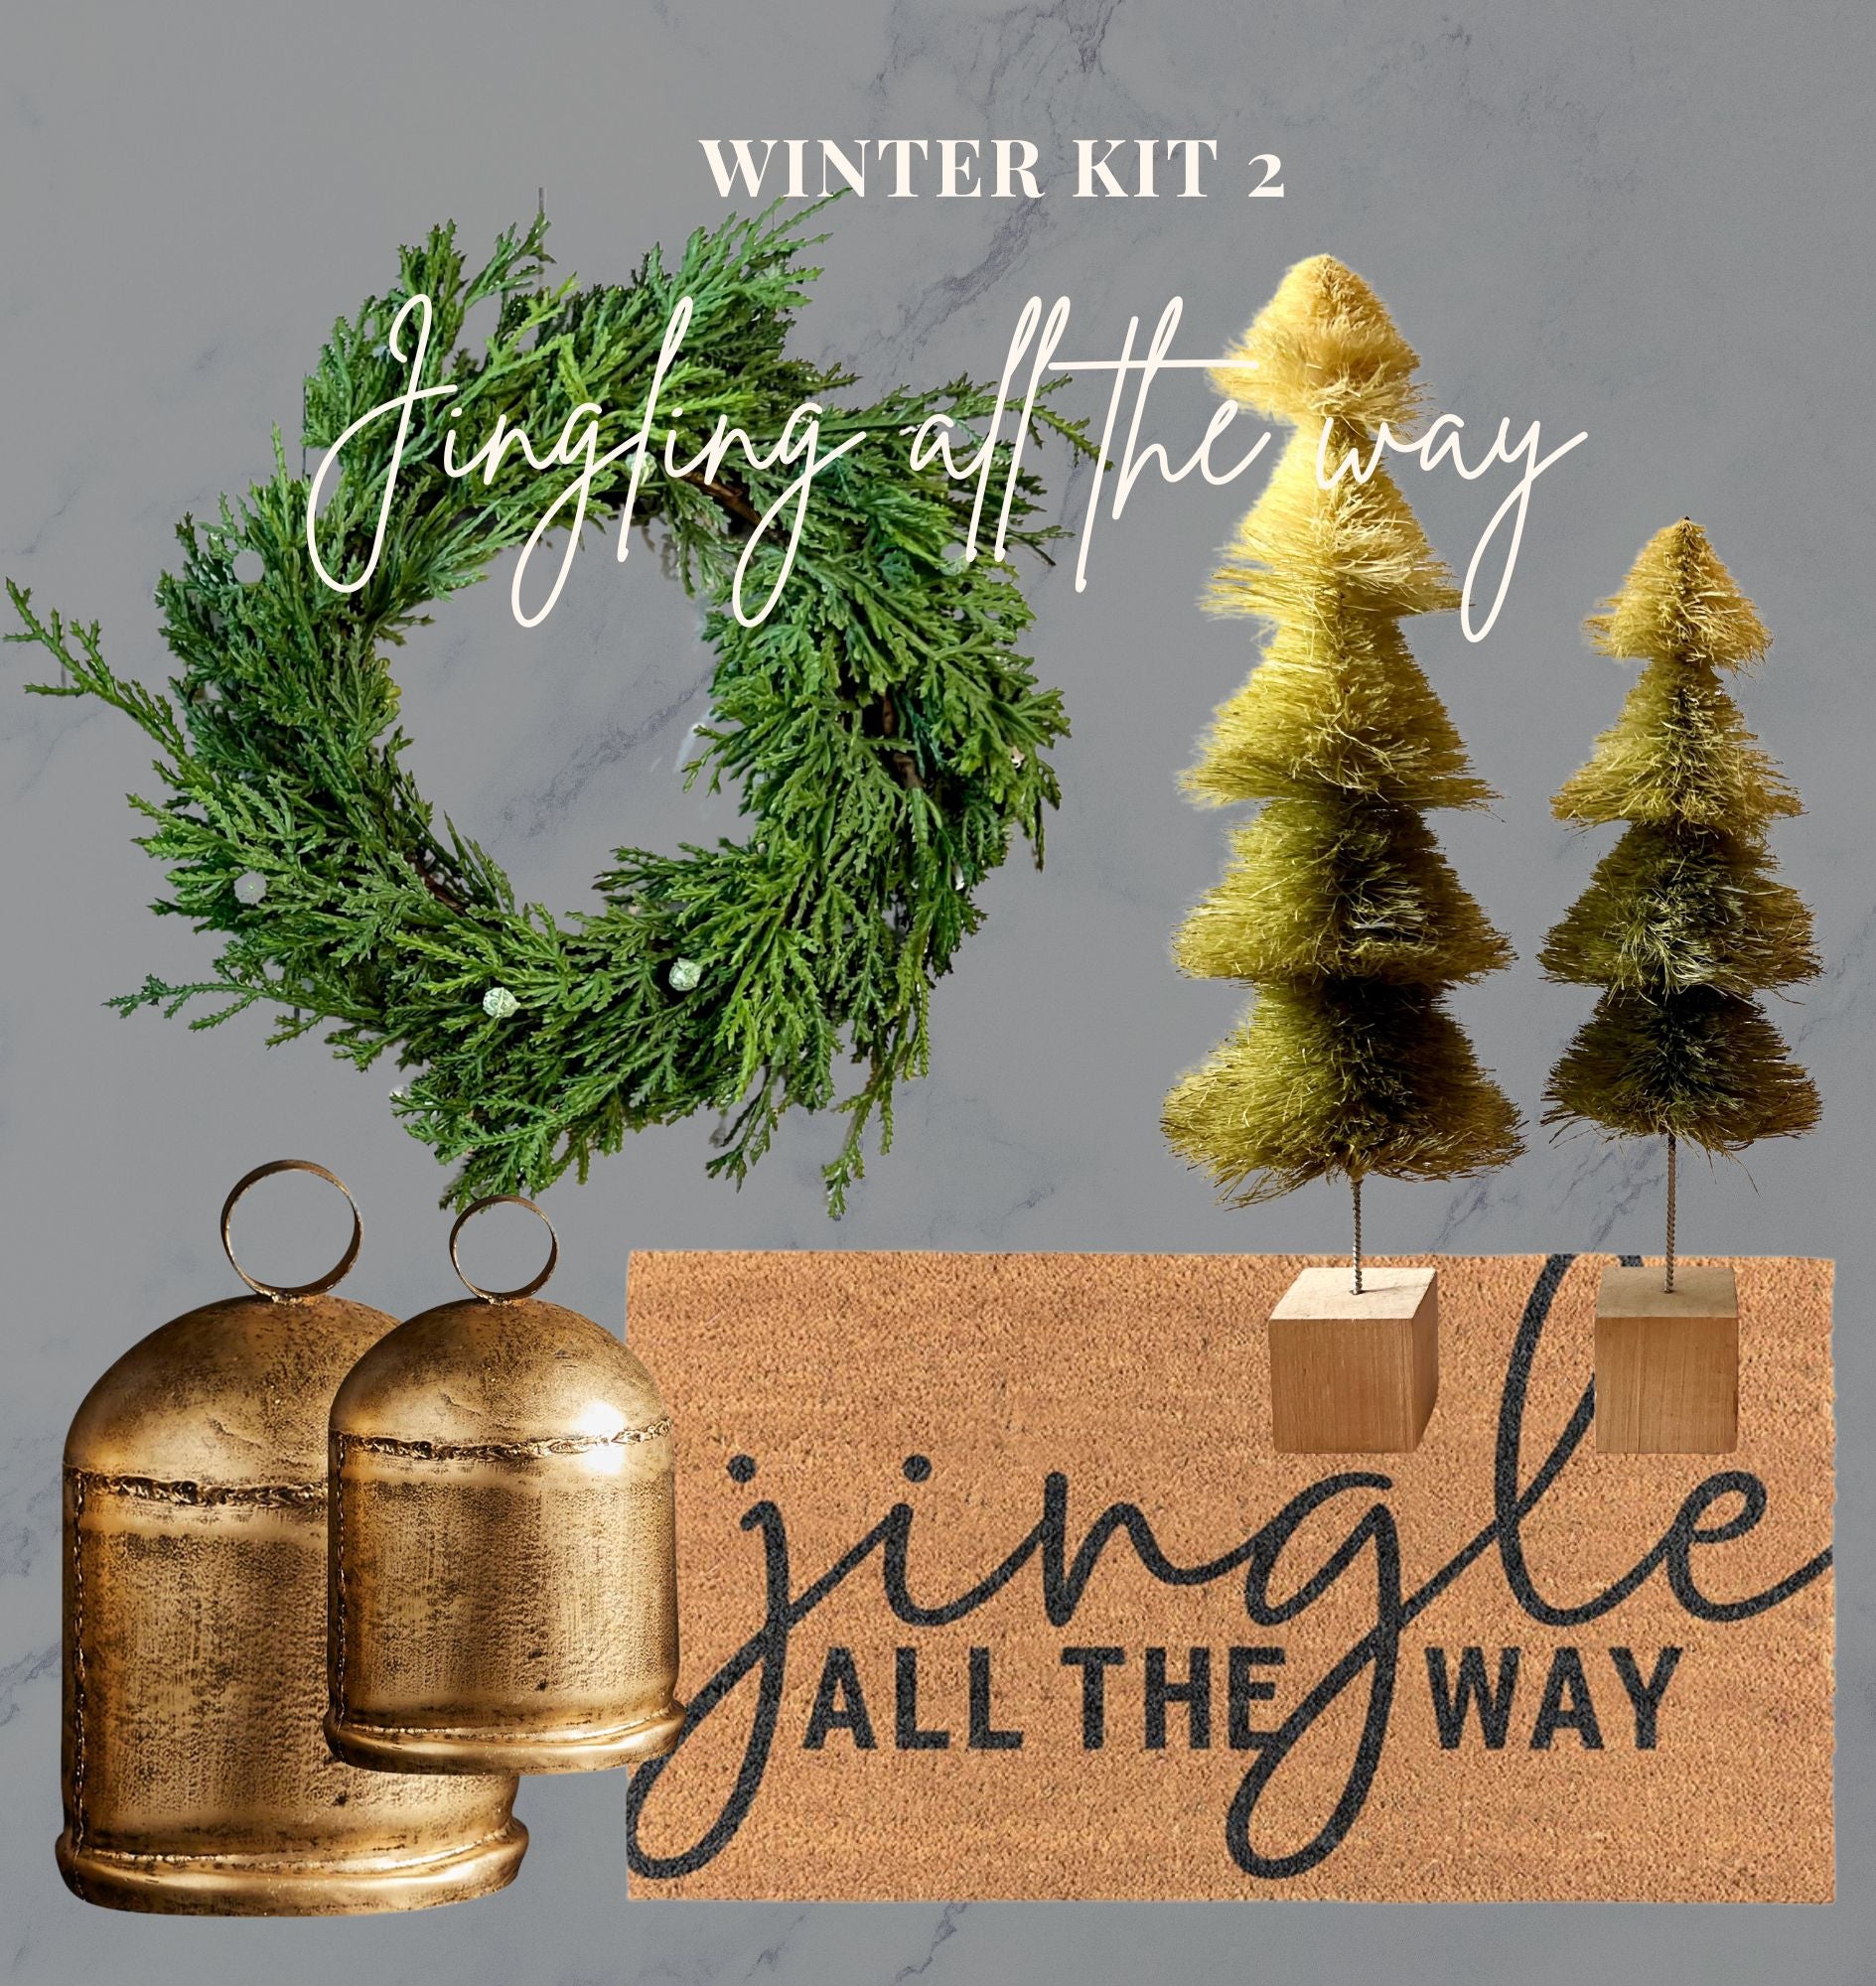 Winter Kit 2 - Jingle All the Way 2022